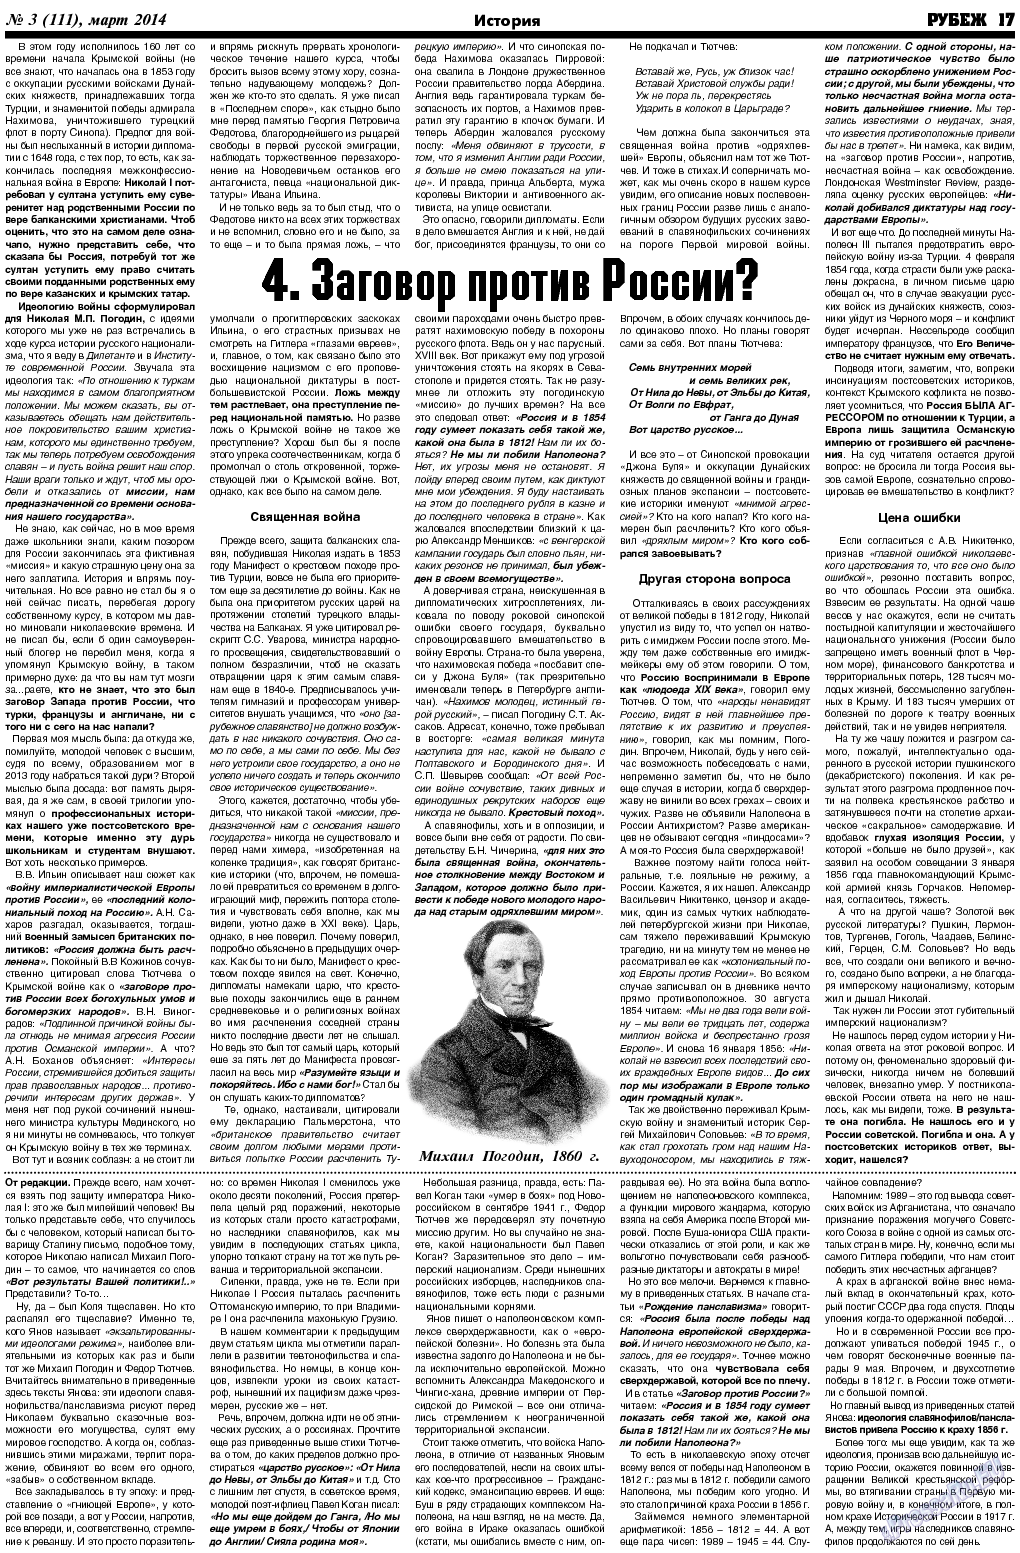 Рубеж, газета. 2014 №3 стр.17